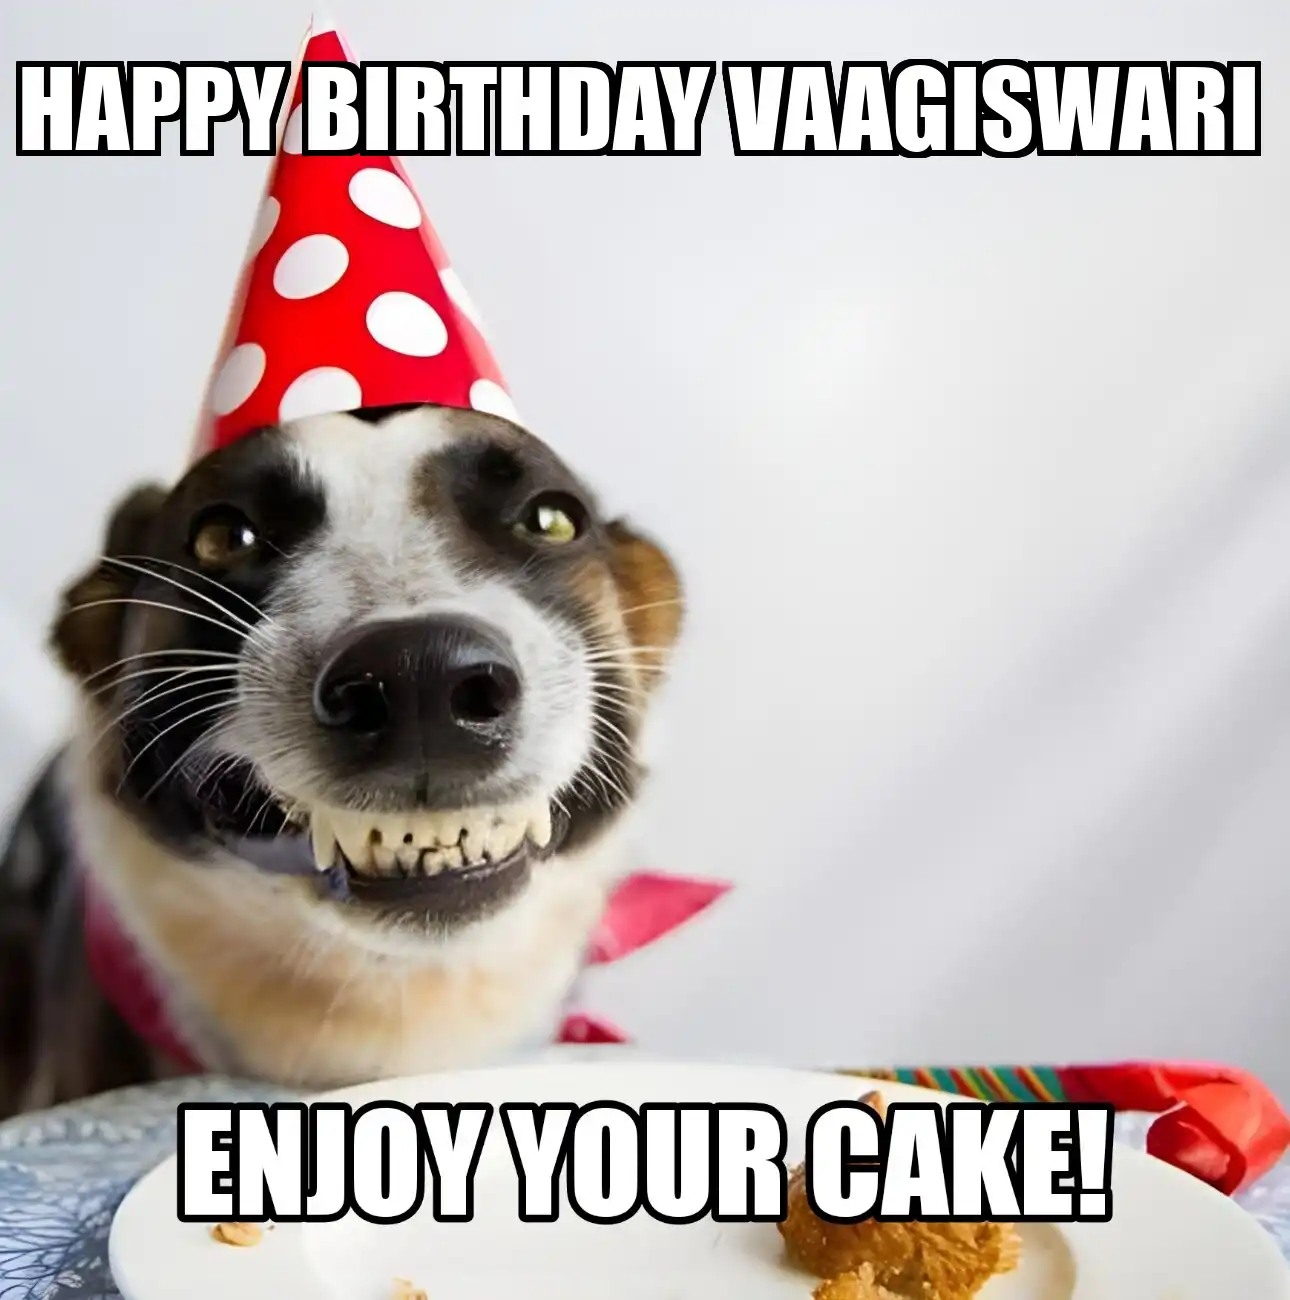 Happy Birthday Vaagiswari Enjoy Your Cake Dog Meme